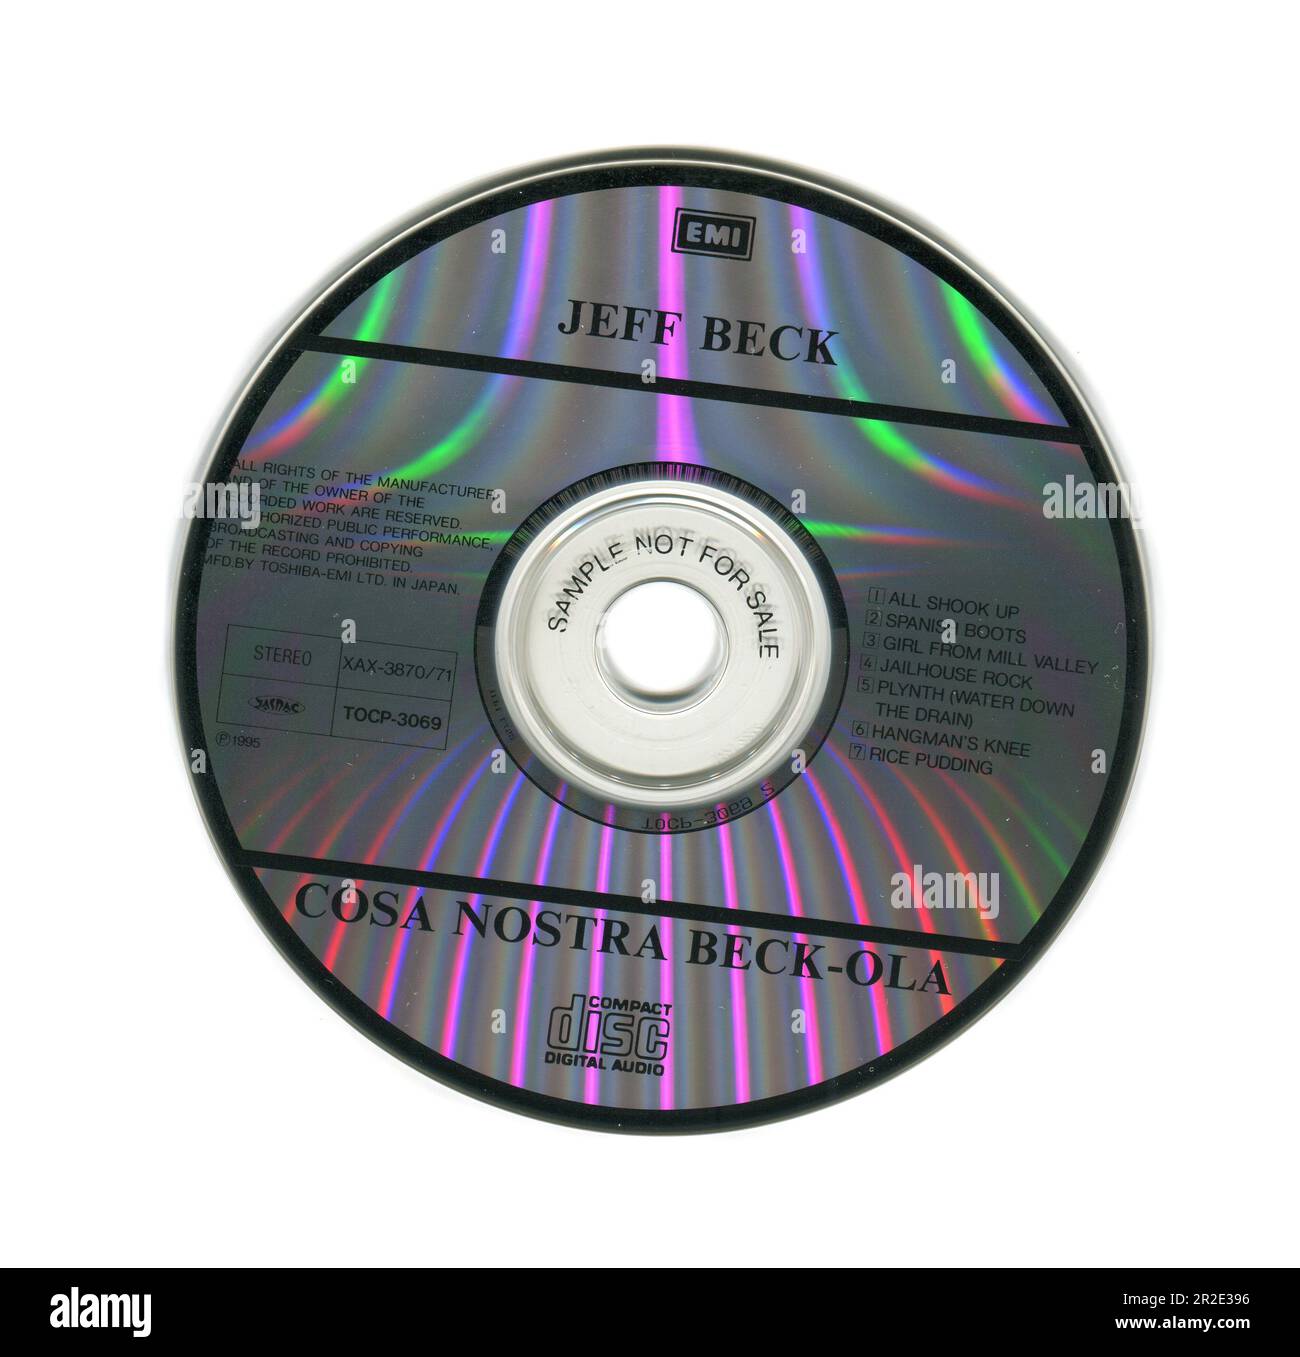 CD: Jeff Beck – Beck-Ola. (TOCP-3069), Promo, sortie: 28 juin 1995. Banque D'Images